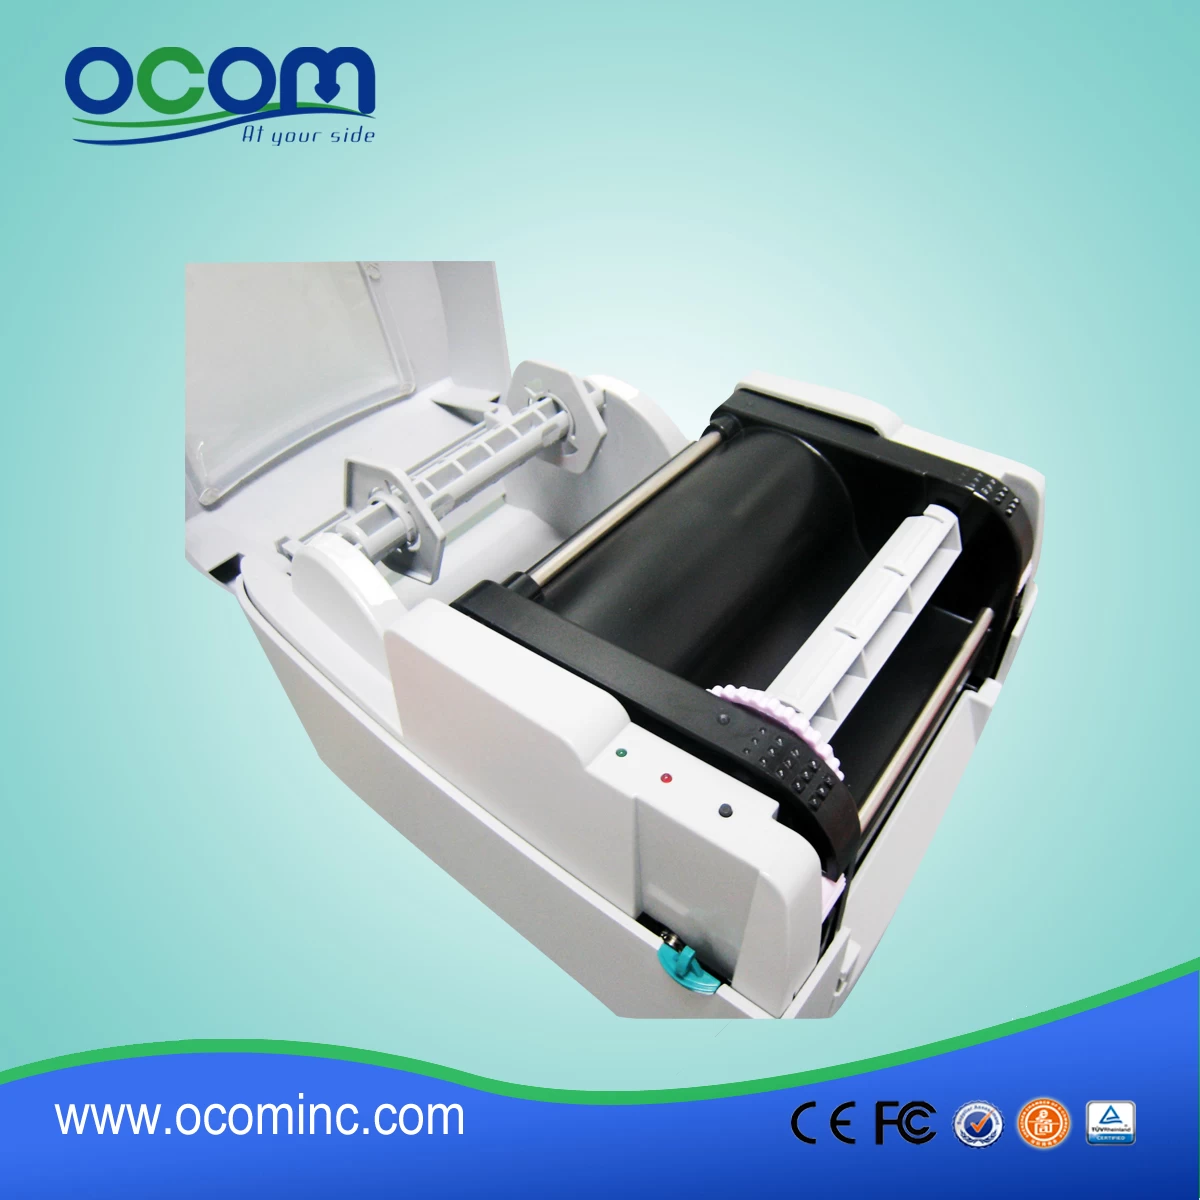 Thermal Transfer and Direct Thermal Label Printer machine